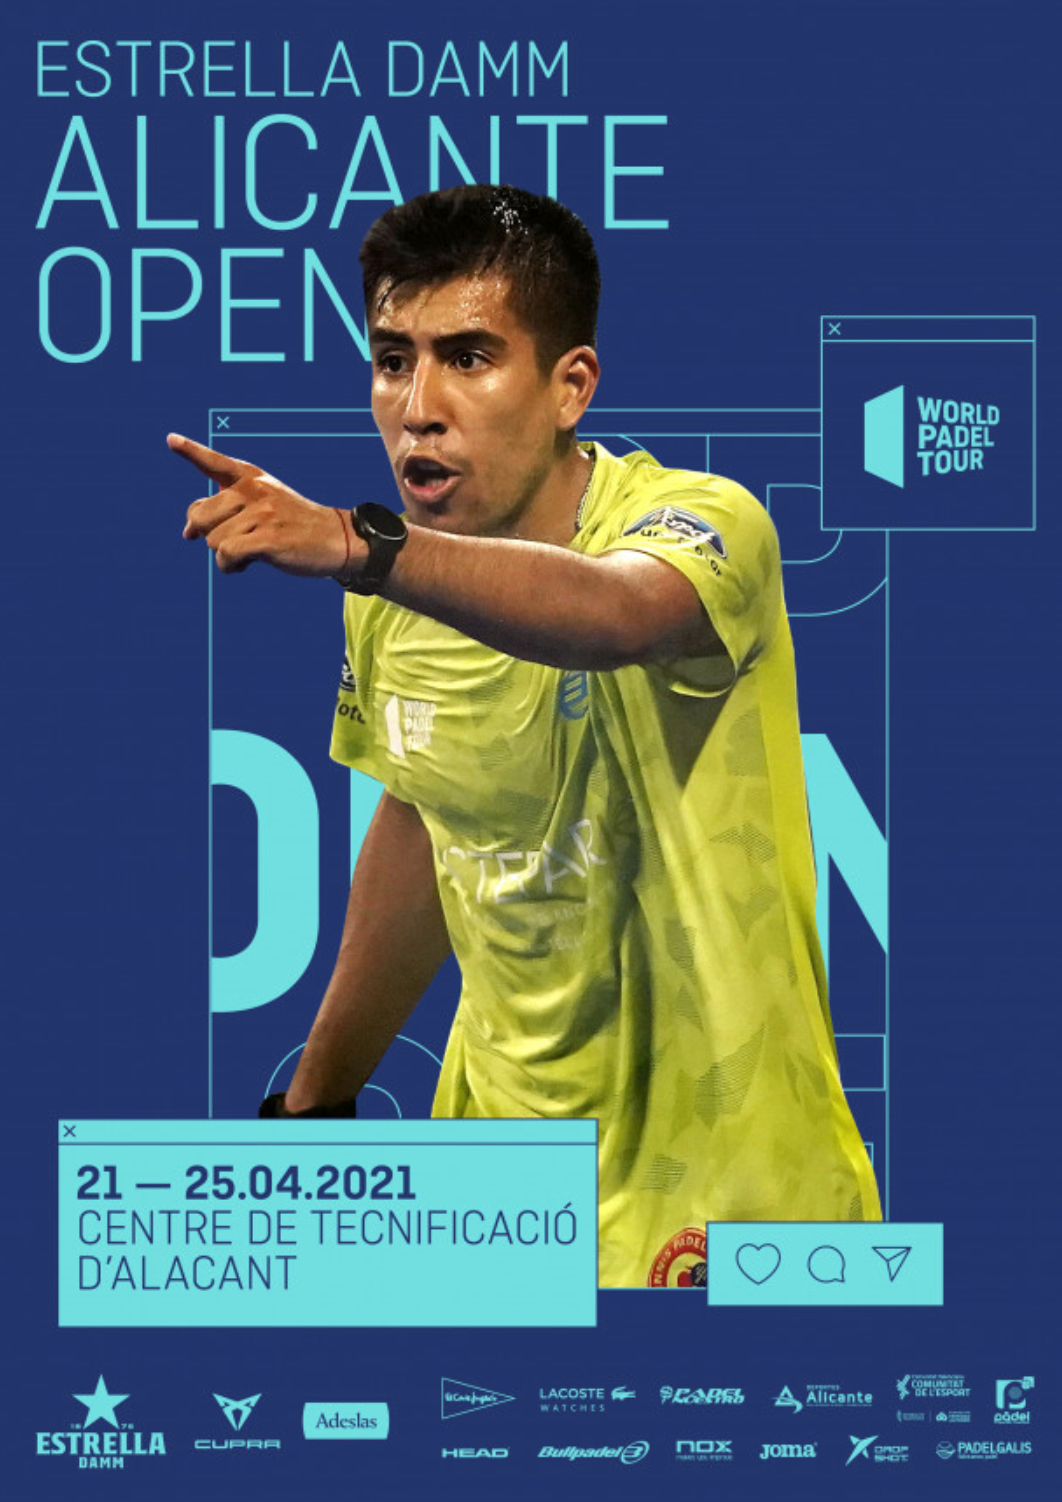 Alicante Open 2021